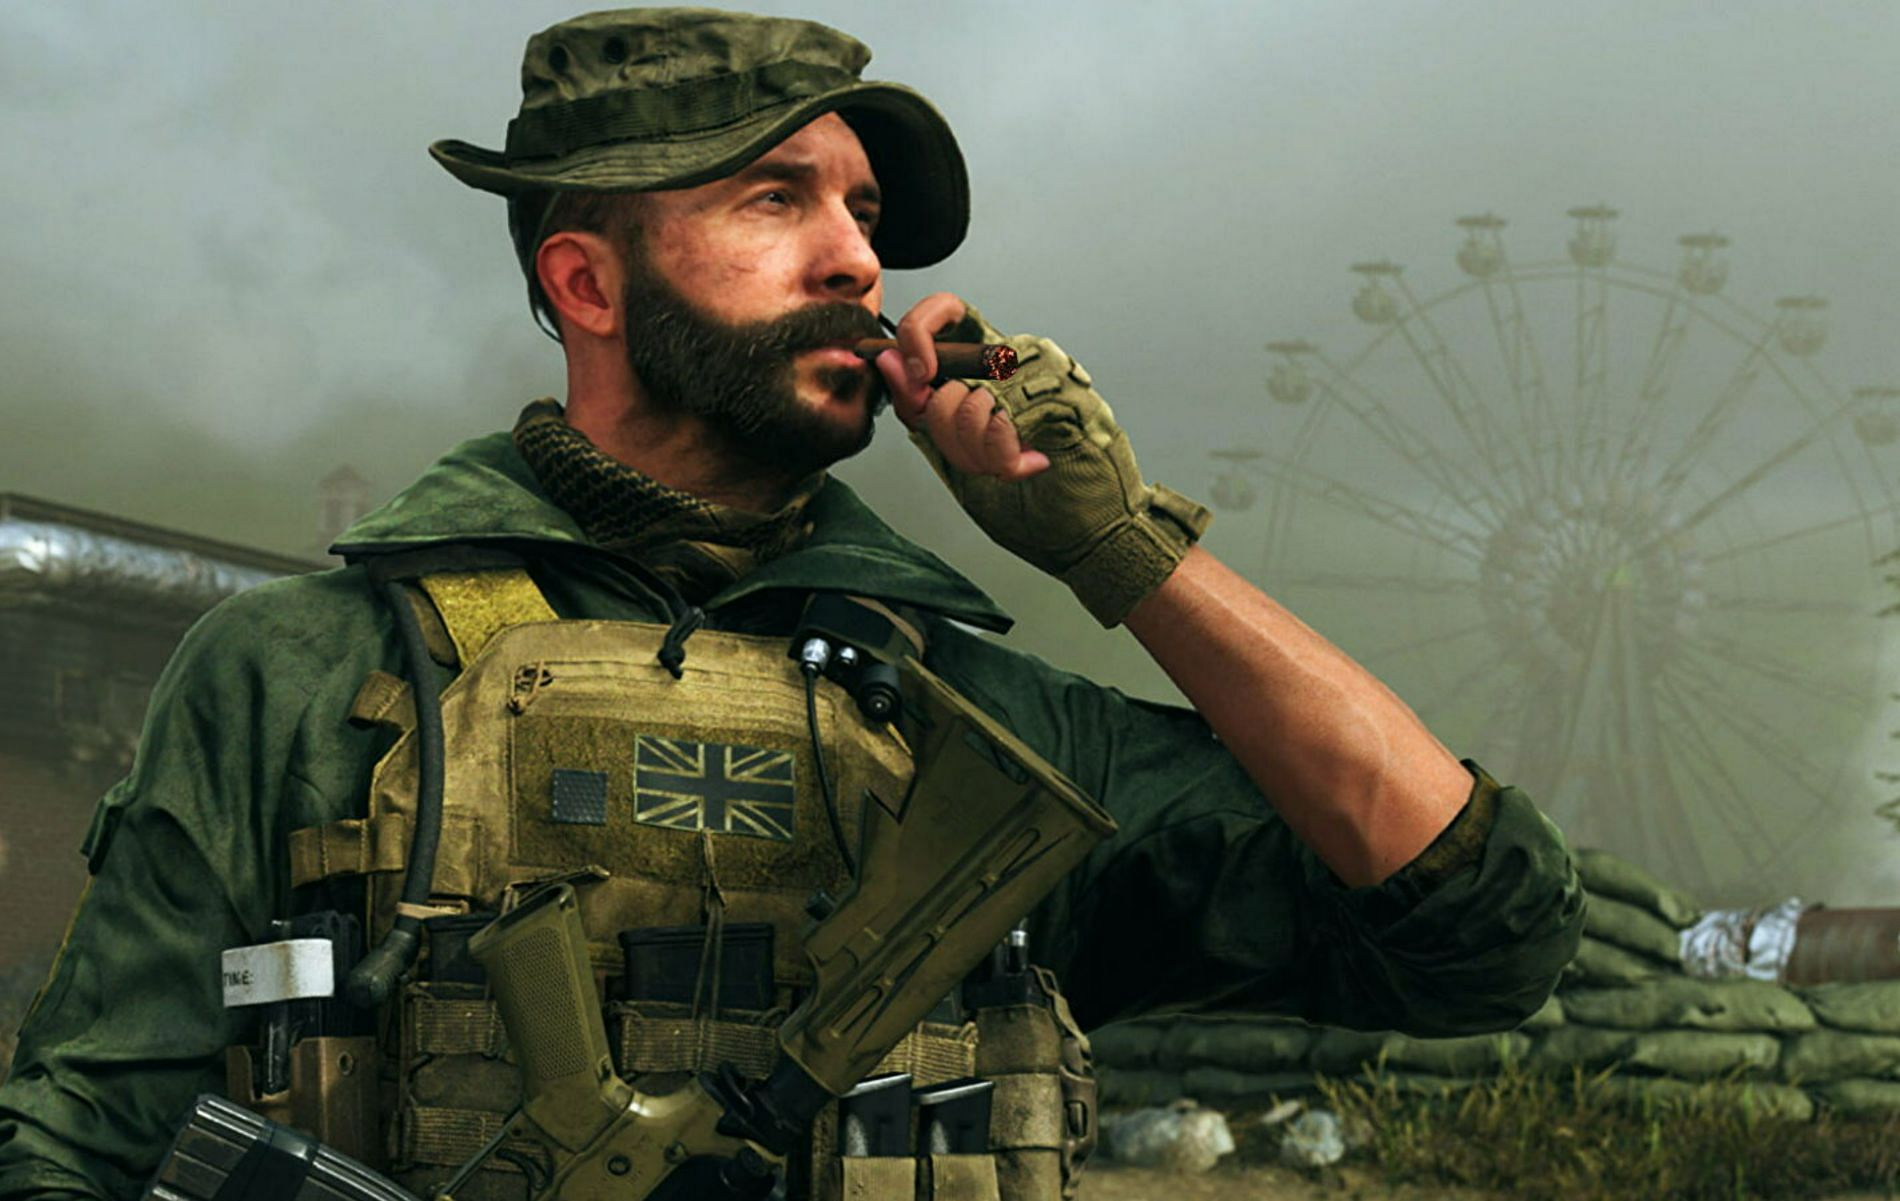 Modern Warfare 2 'connection failed' screen error: How to fix